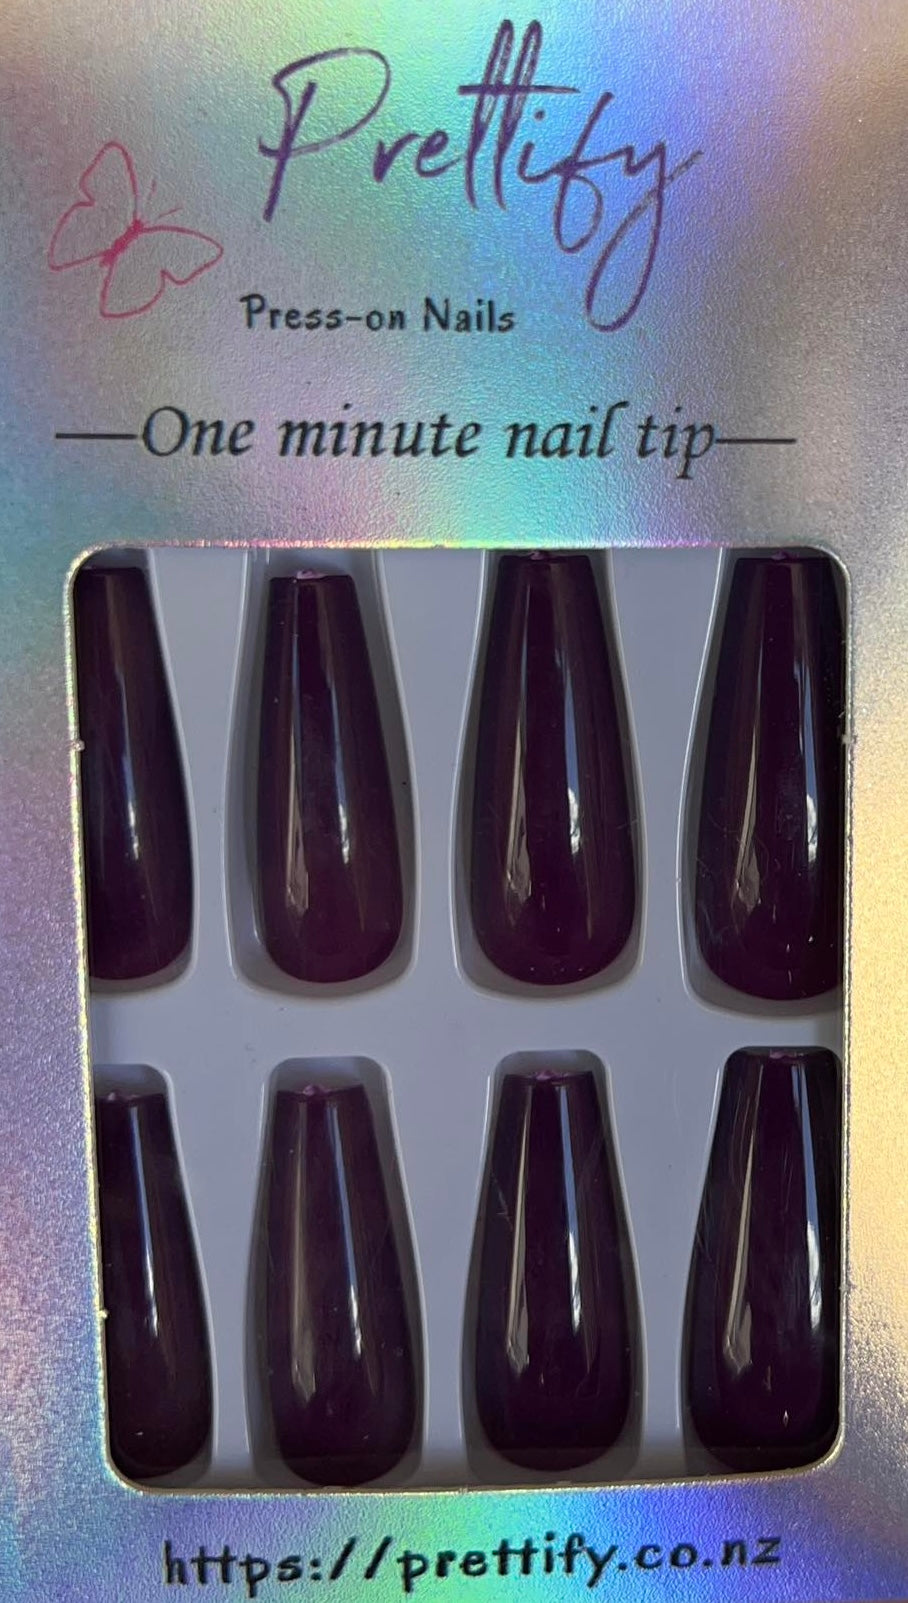 Aubergine - Coffin Press on Nails 30pcs #BLC030